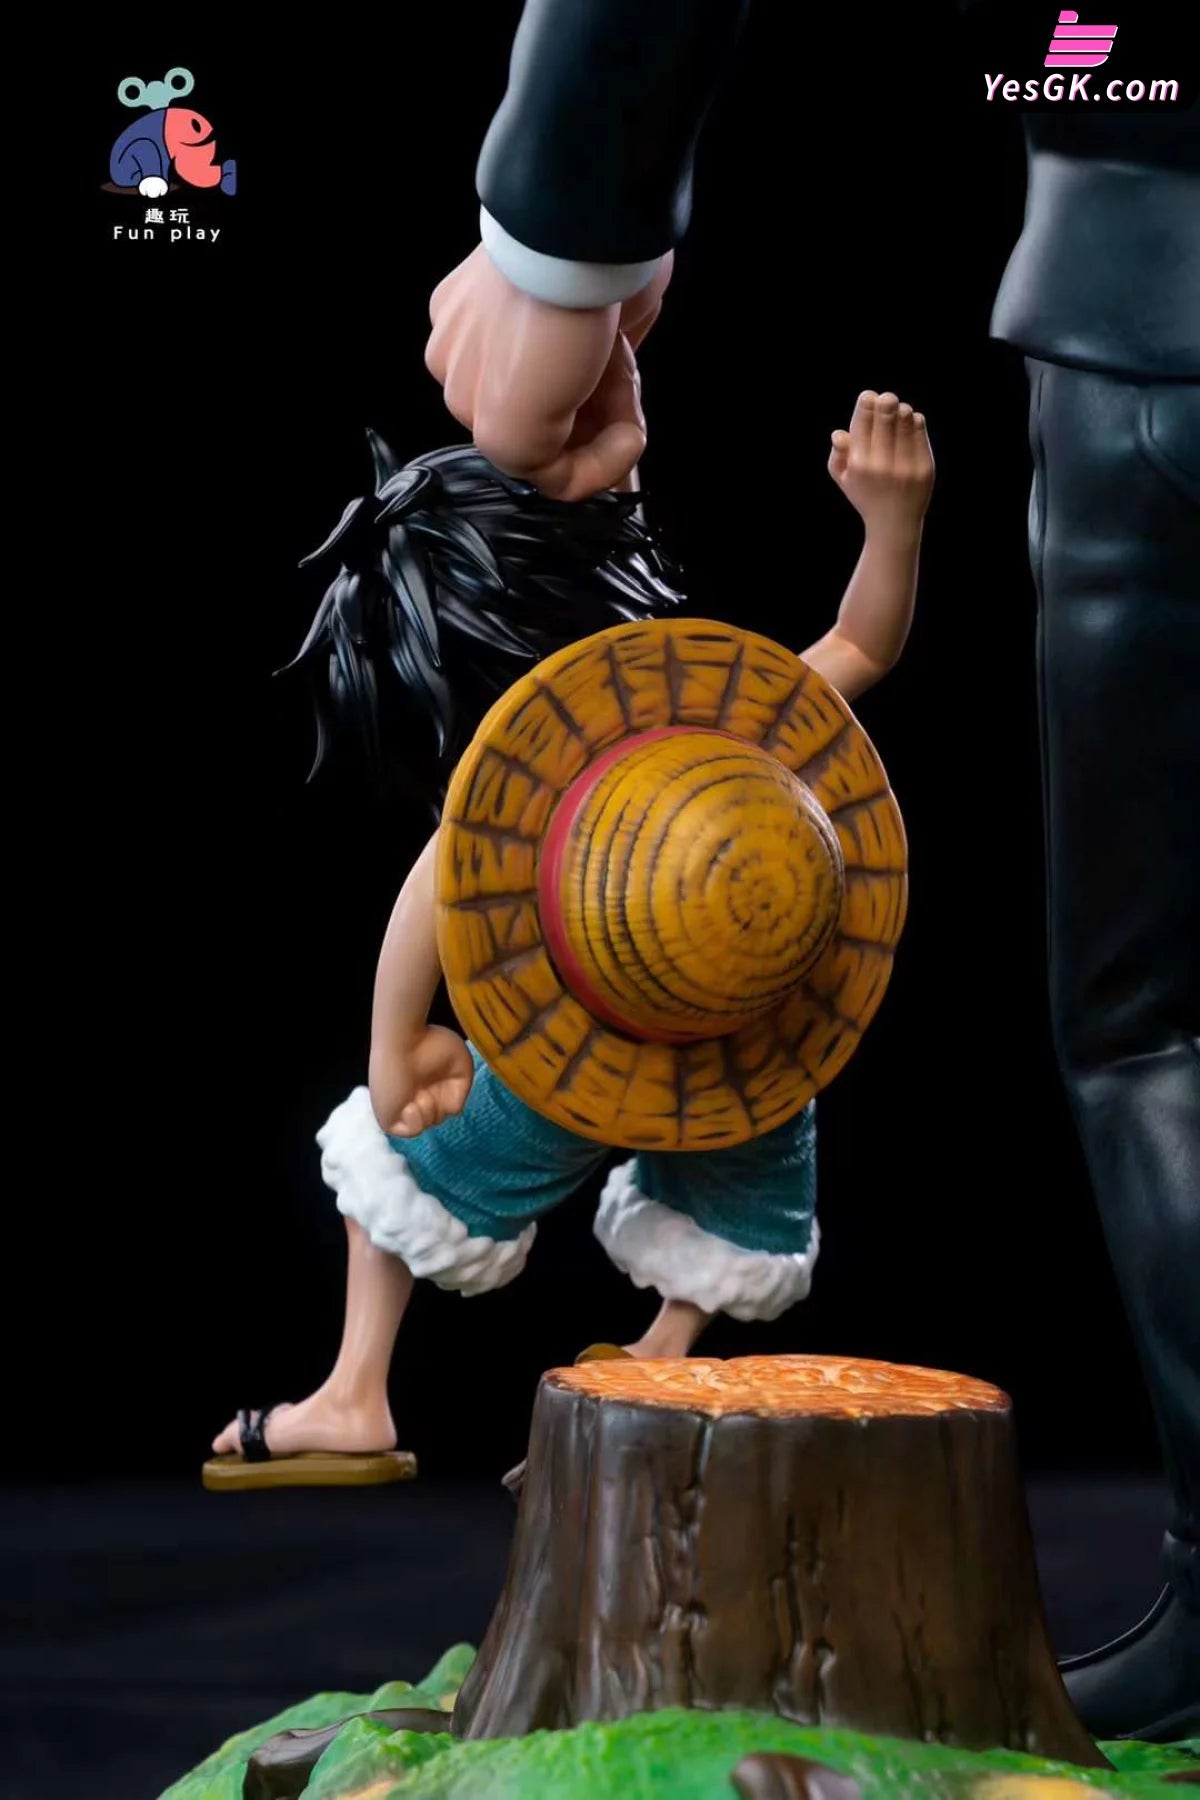 One Piece Creator X Creator Monkey D Luffy Figure (Import)